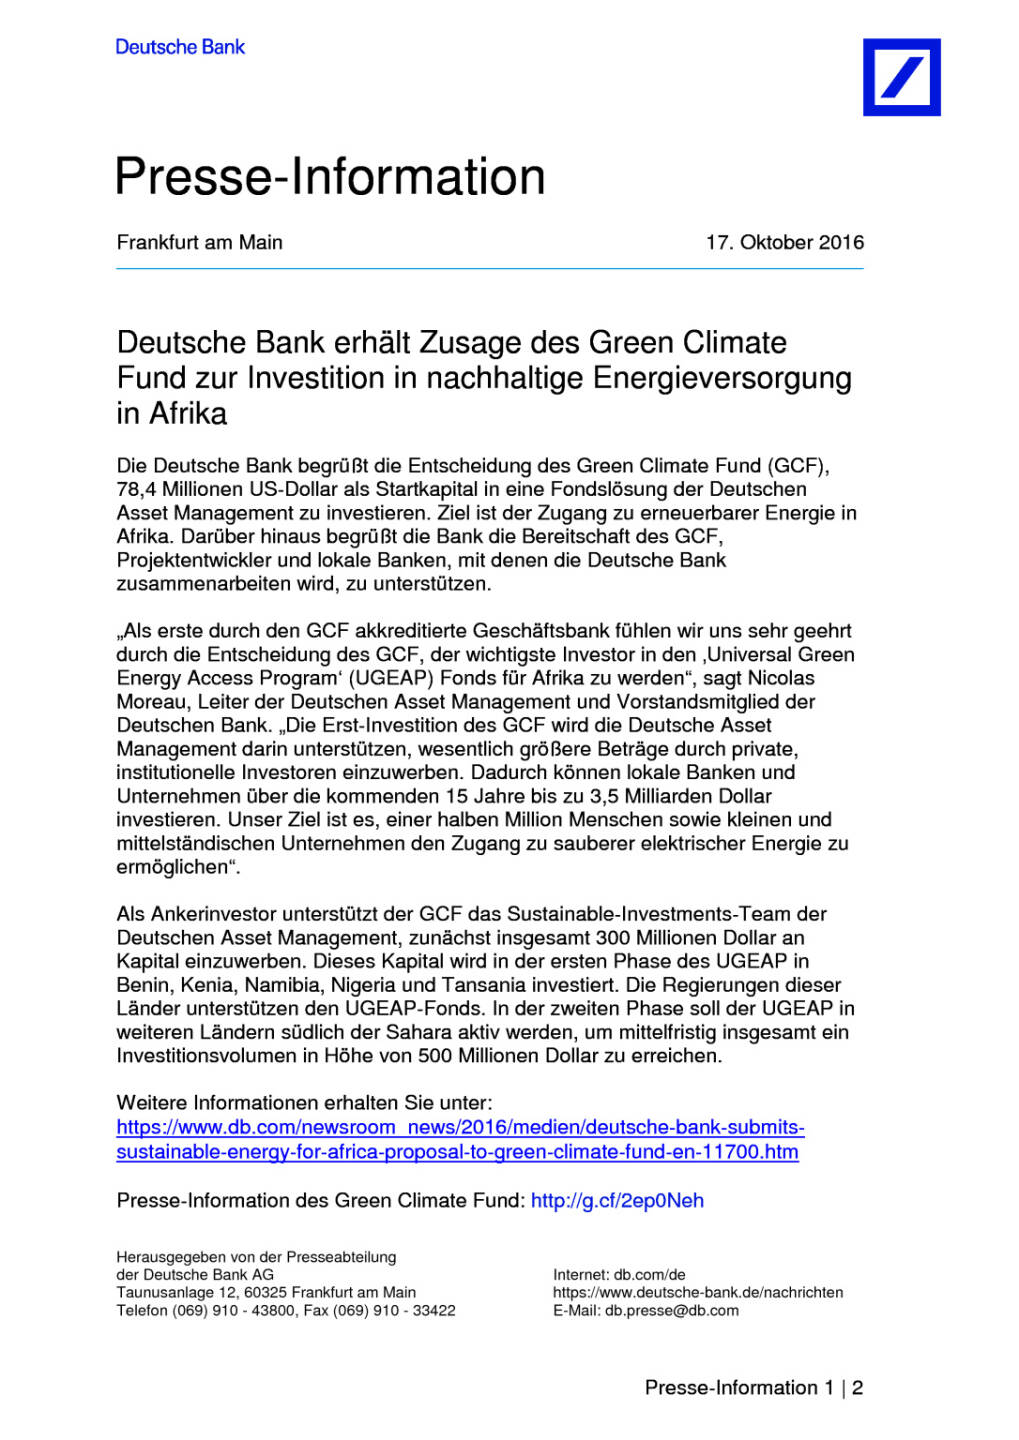 Deutsche Bank: Green Climate Fund, Seite 1/2, komplettes Dokument unter http://boerse-social.com/static/uploads/file_1908_deutsche_bank_green_climate_fund.pdf